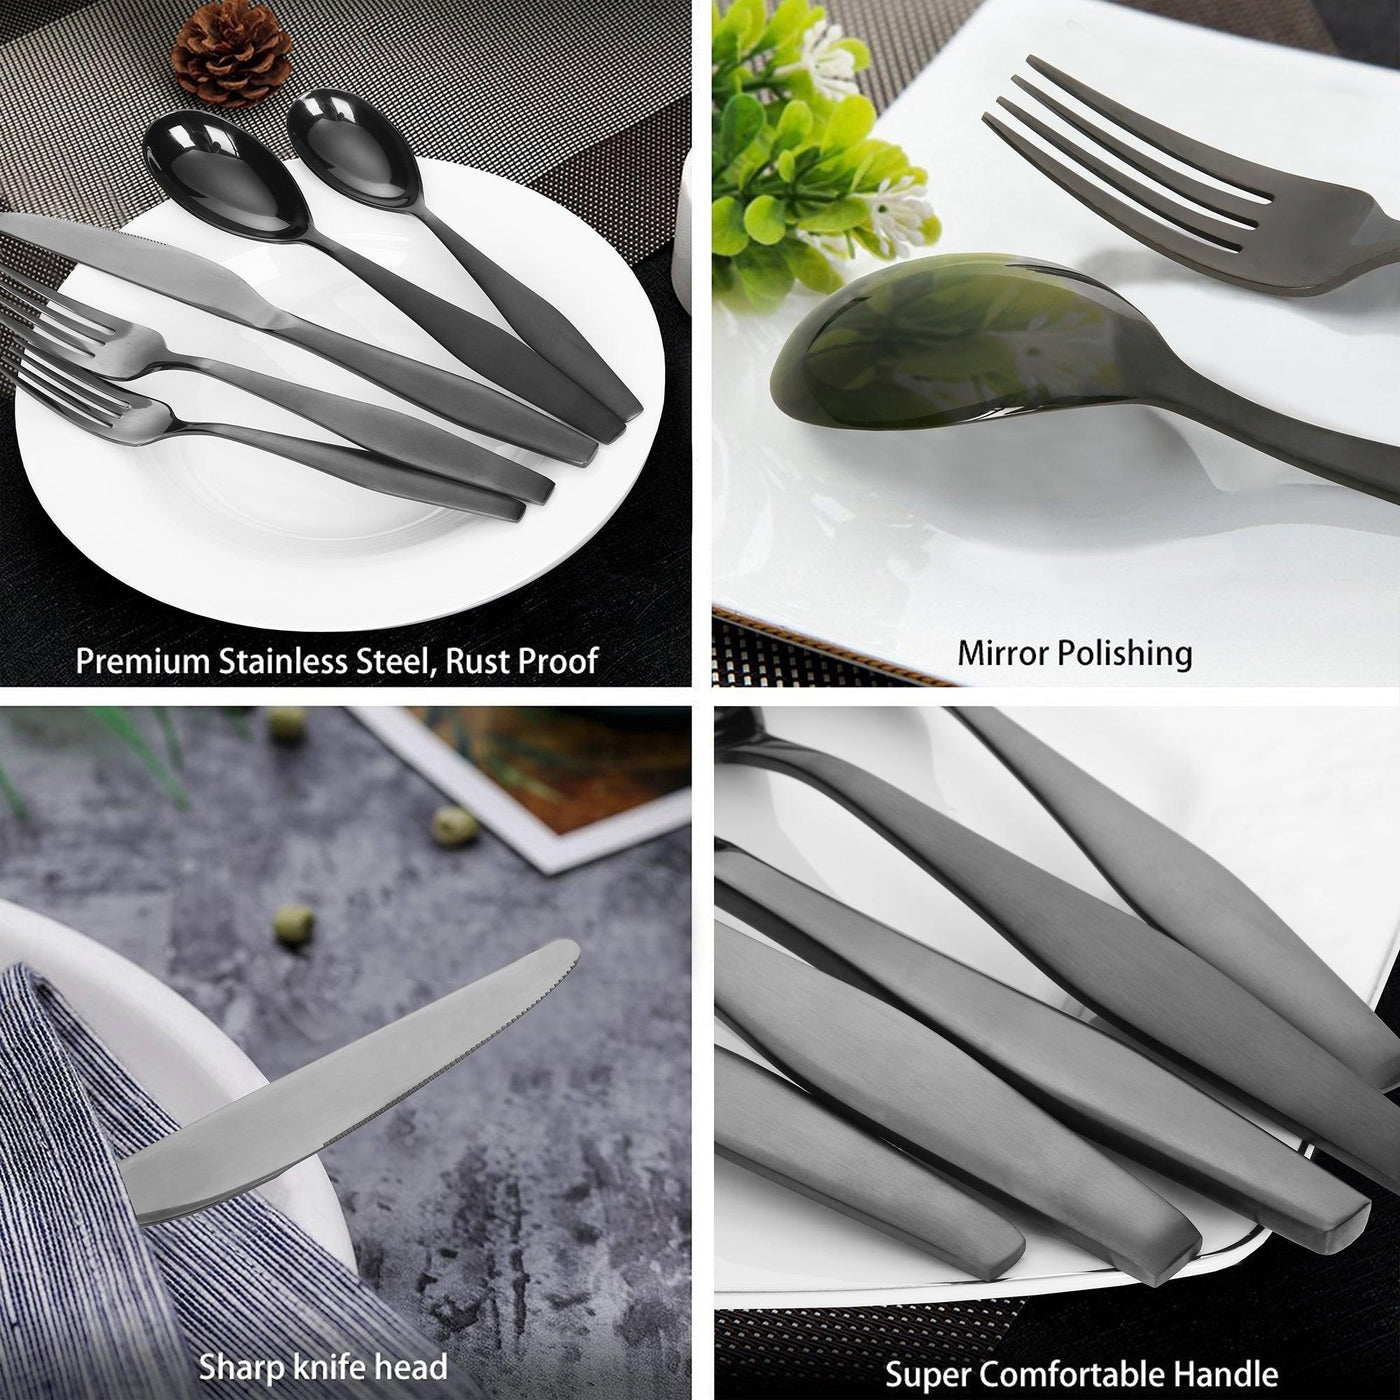 Lorena 20-Piece Stainless Steel Black Silverware Flatware Cutlery Set, Service for 4, Roald